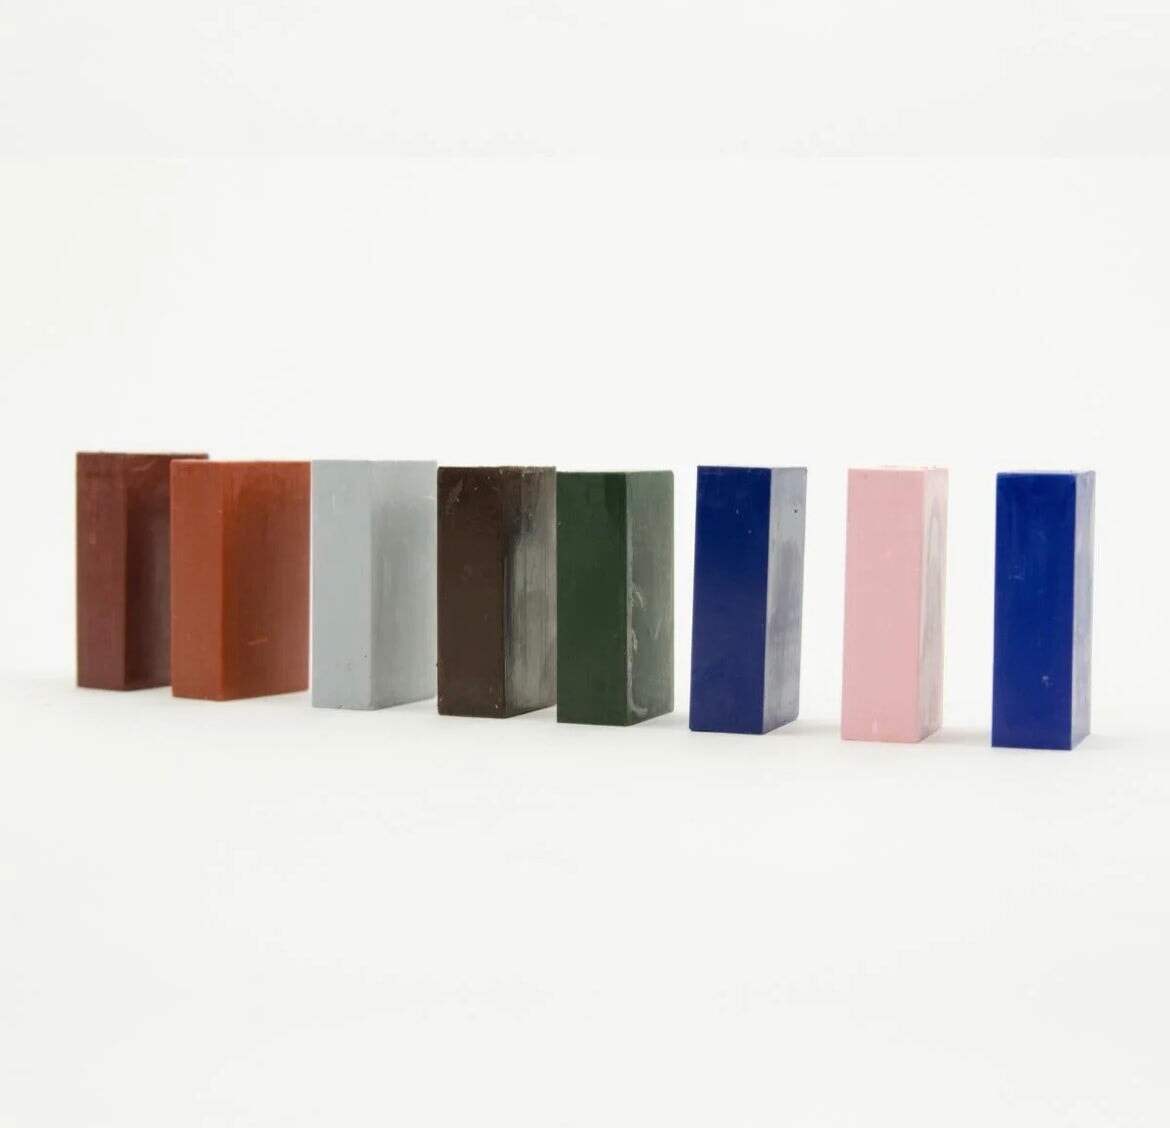 Stockmar, Block Crayon Replacements, Individual, 32 Color Choices - Alder & Alouette